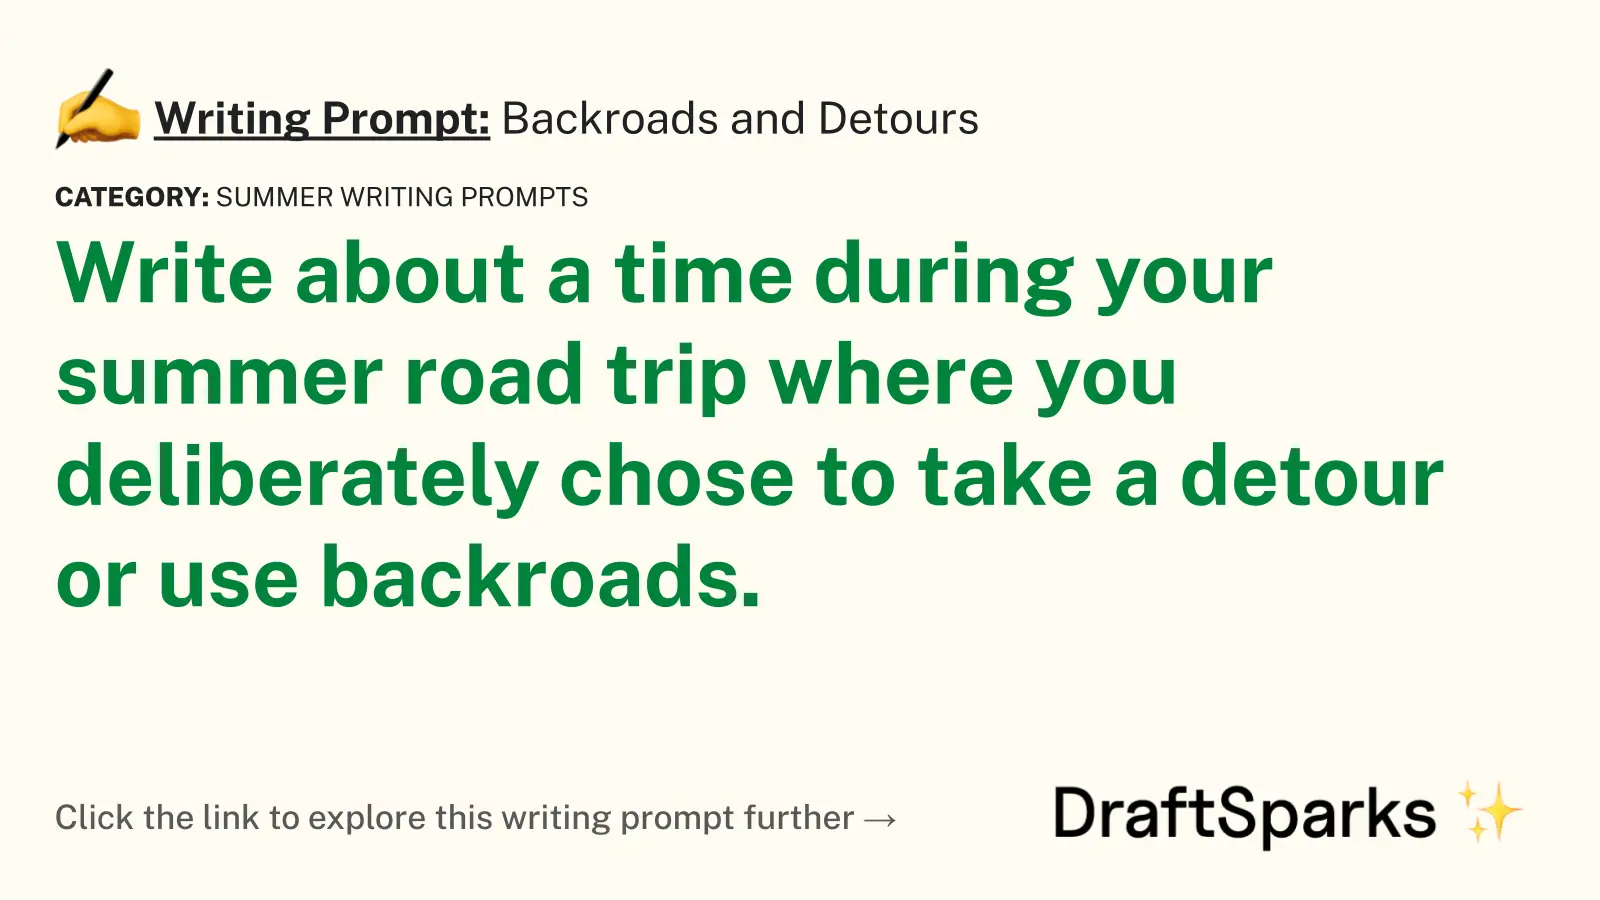 Backroads and Detours